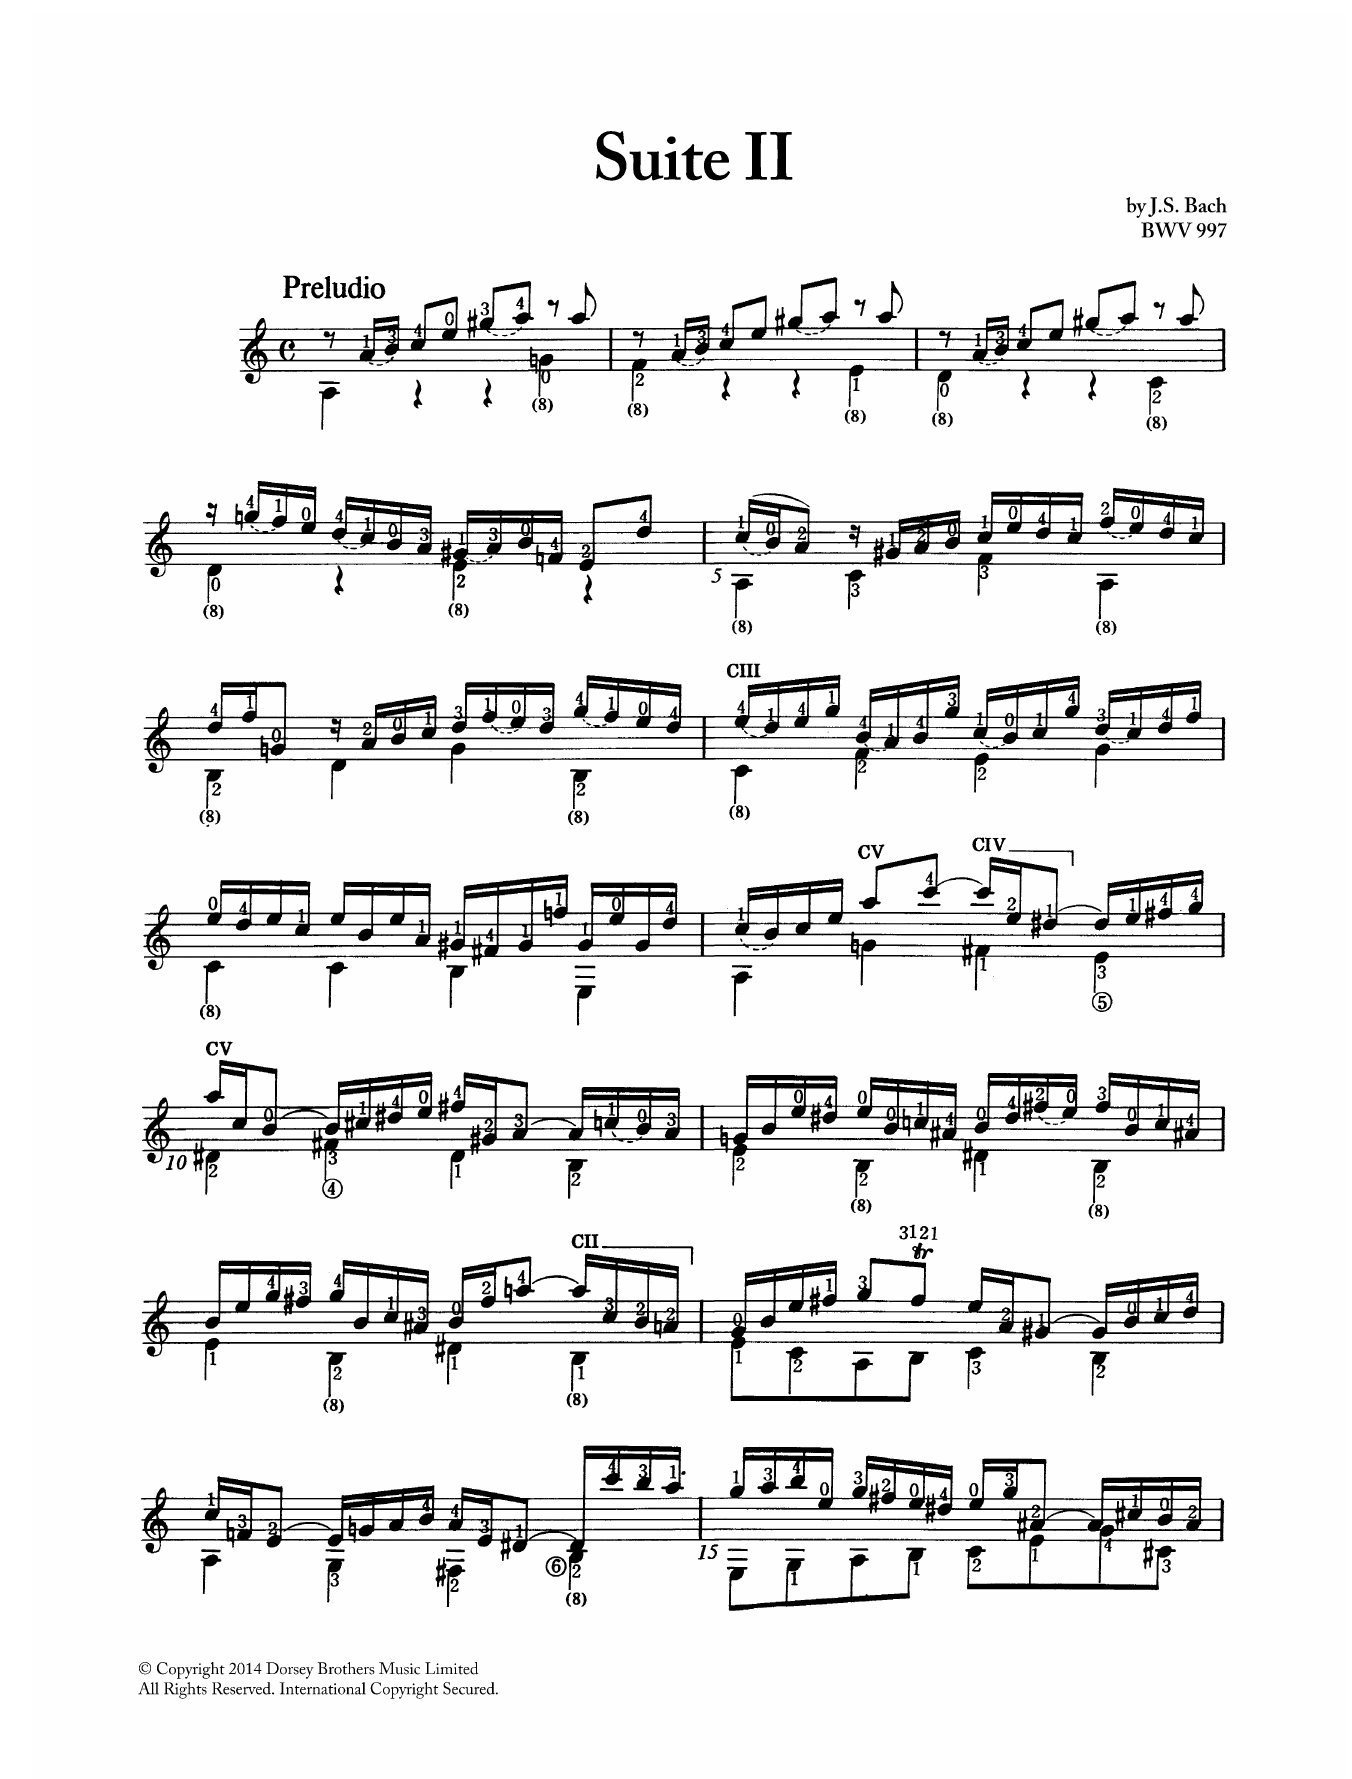 Johann Sebastian Bach Suite in Cm BWV 997 Sheet Music Notes & Chords for Guitar - Download or Print PDF